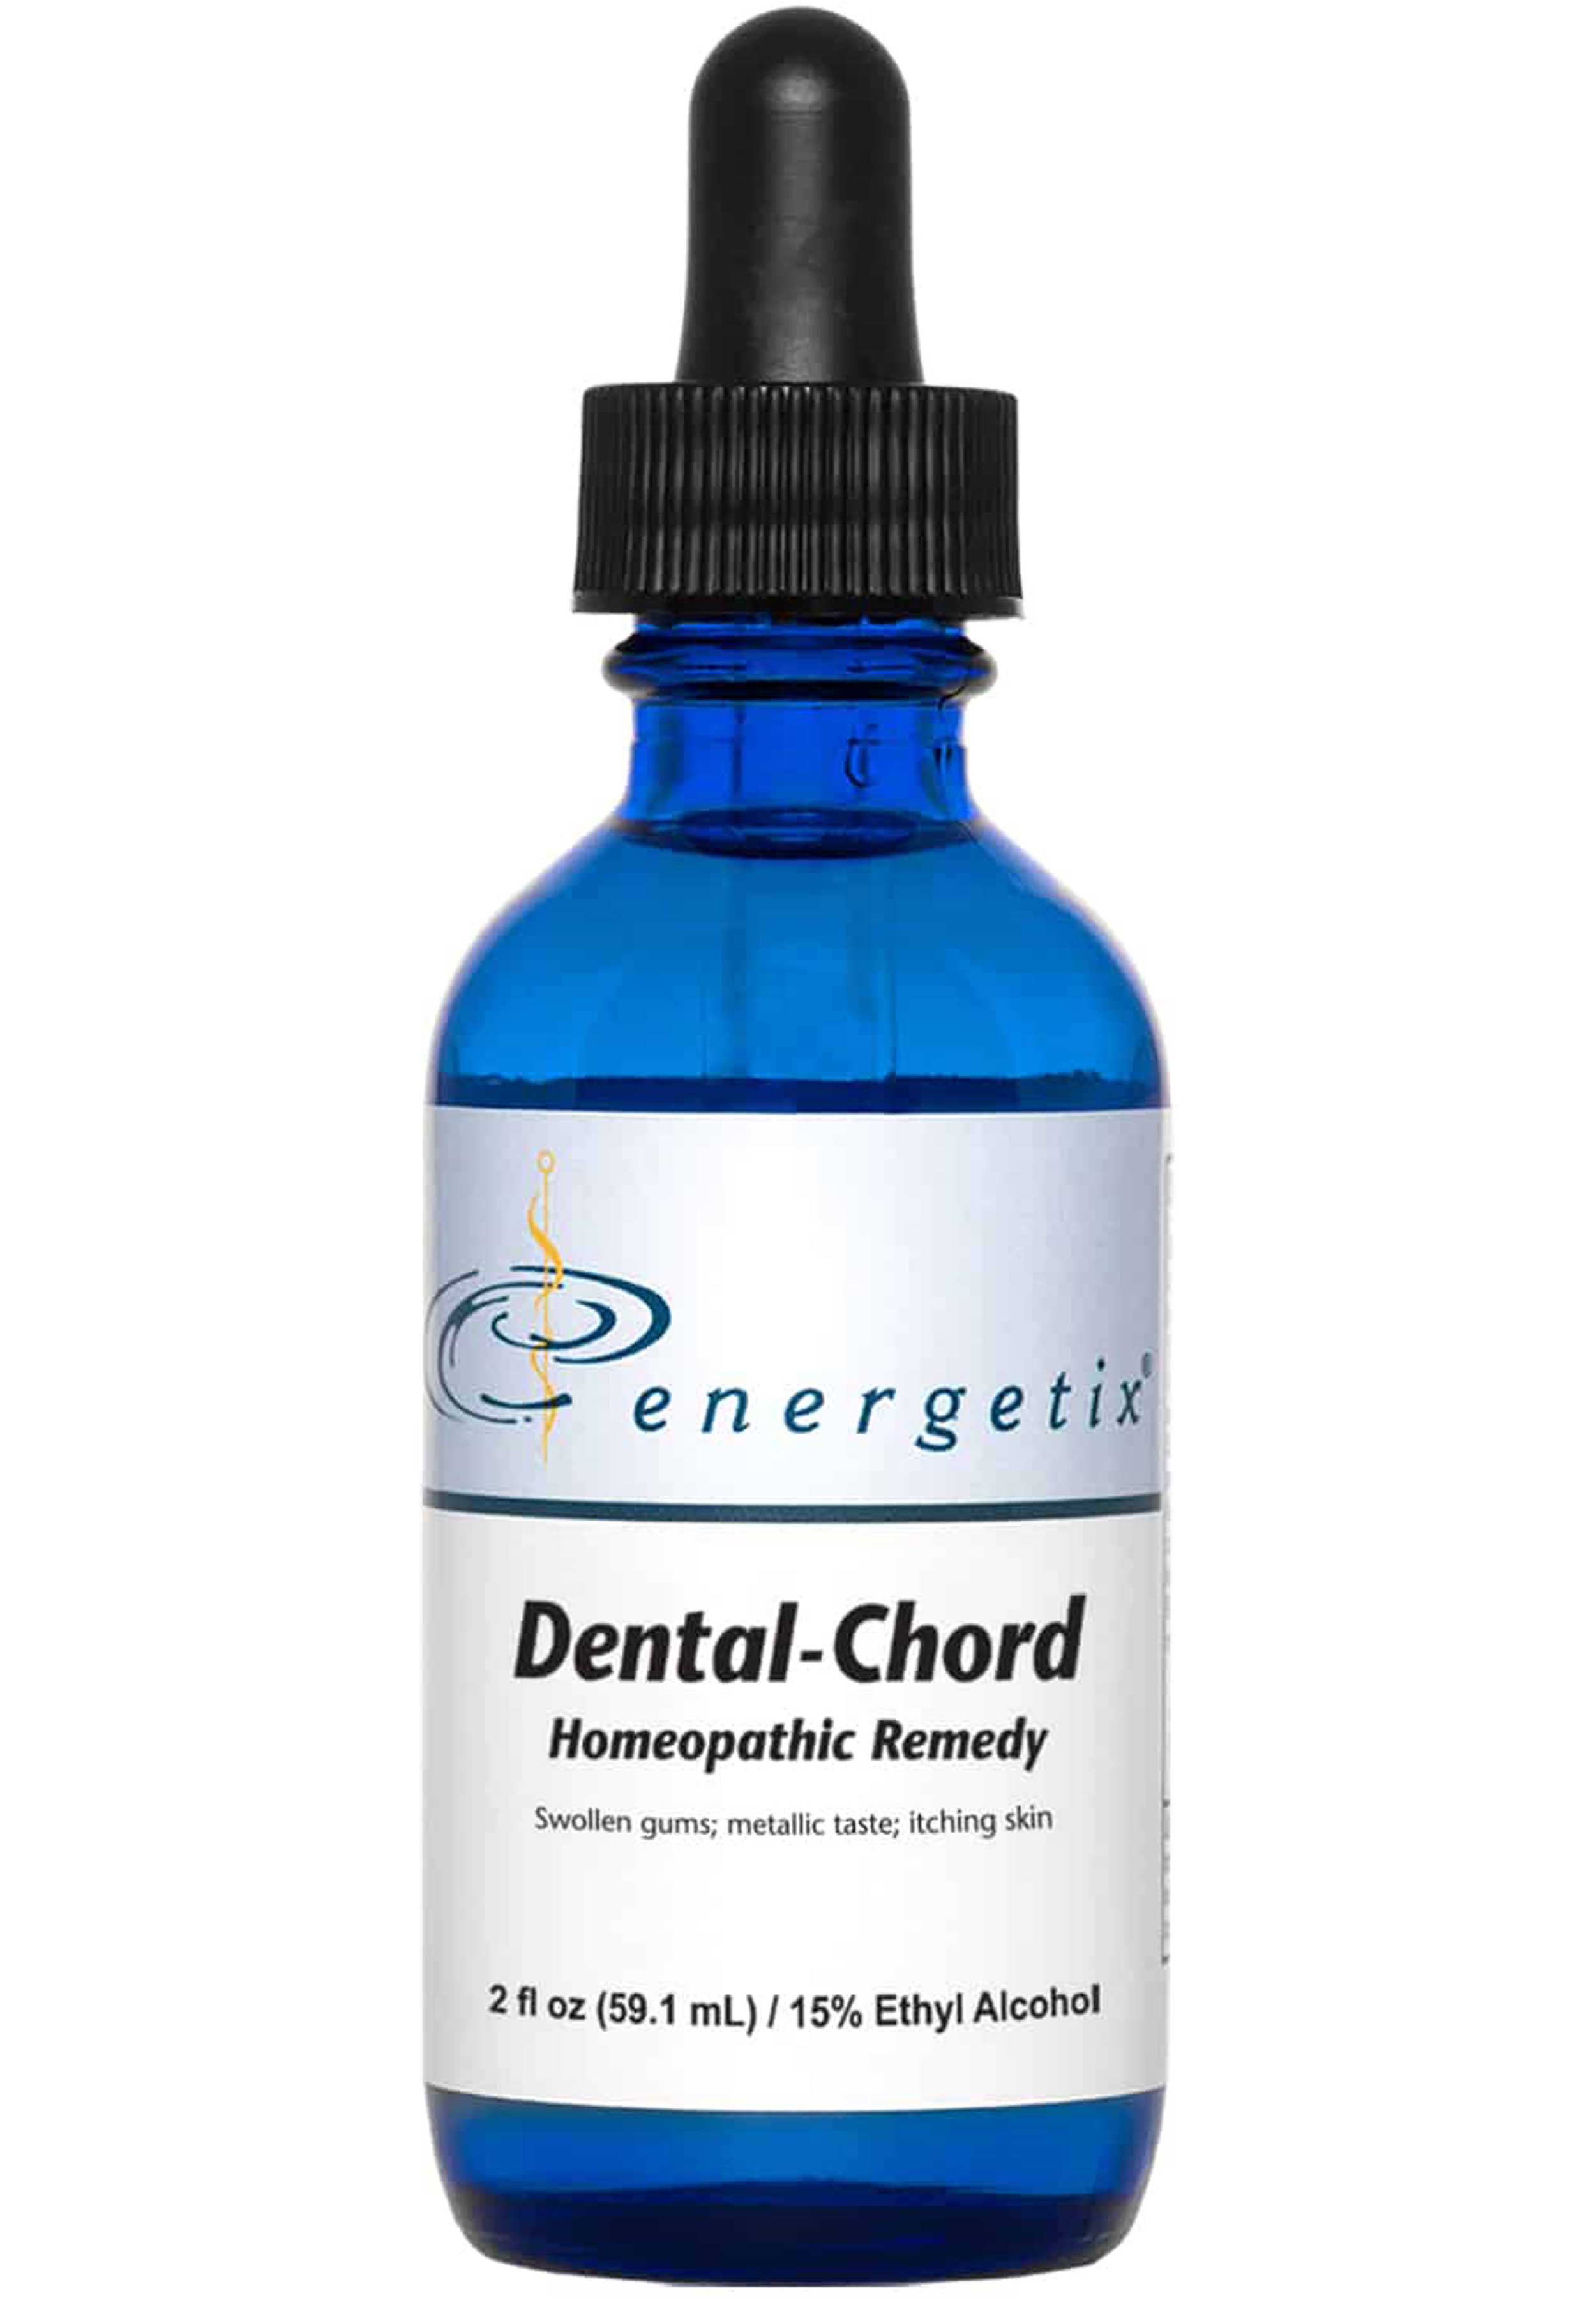 Energetix Dental-Chord